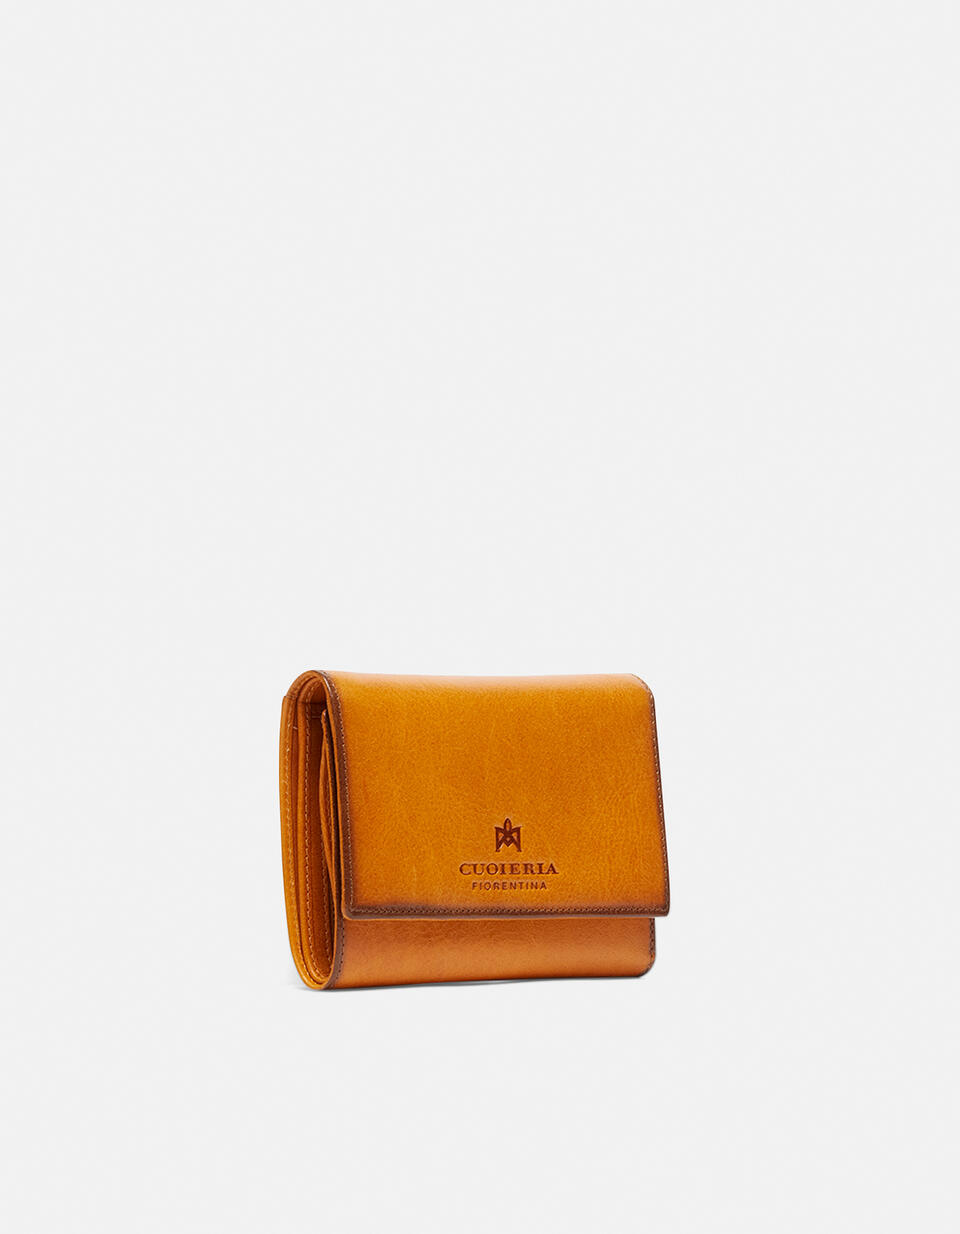 Bifold wallet with side burnt effect - Women's Wallets - Women's Wallets | Wallets  - Women's Wallets - Women's Wallets | WalletsCuoieria Fiorentina